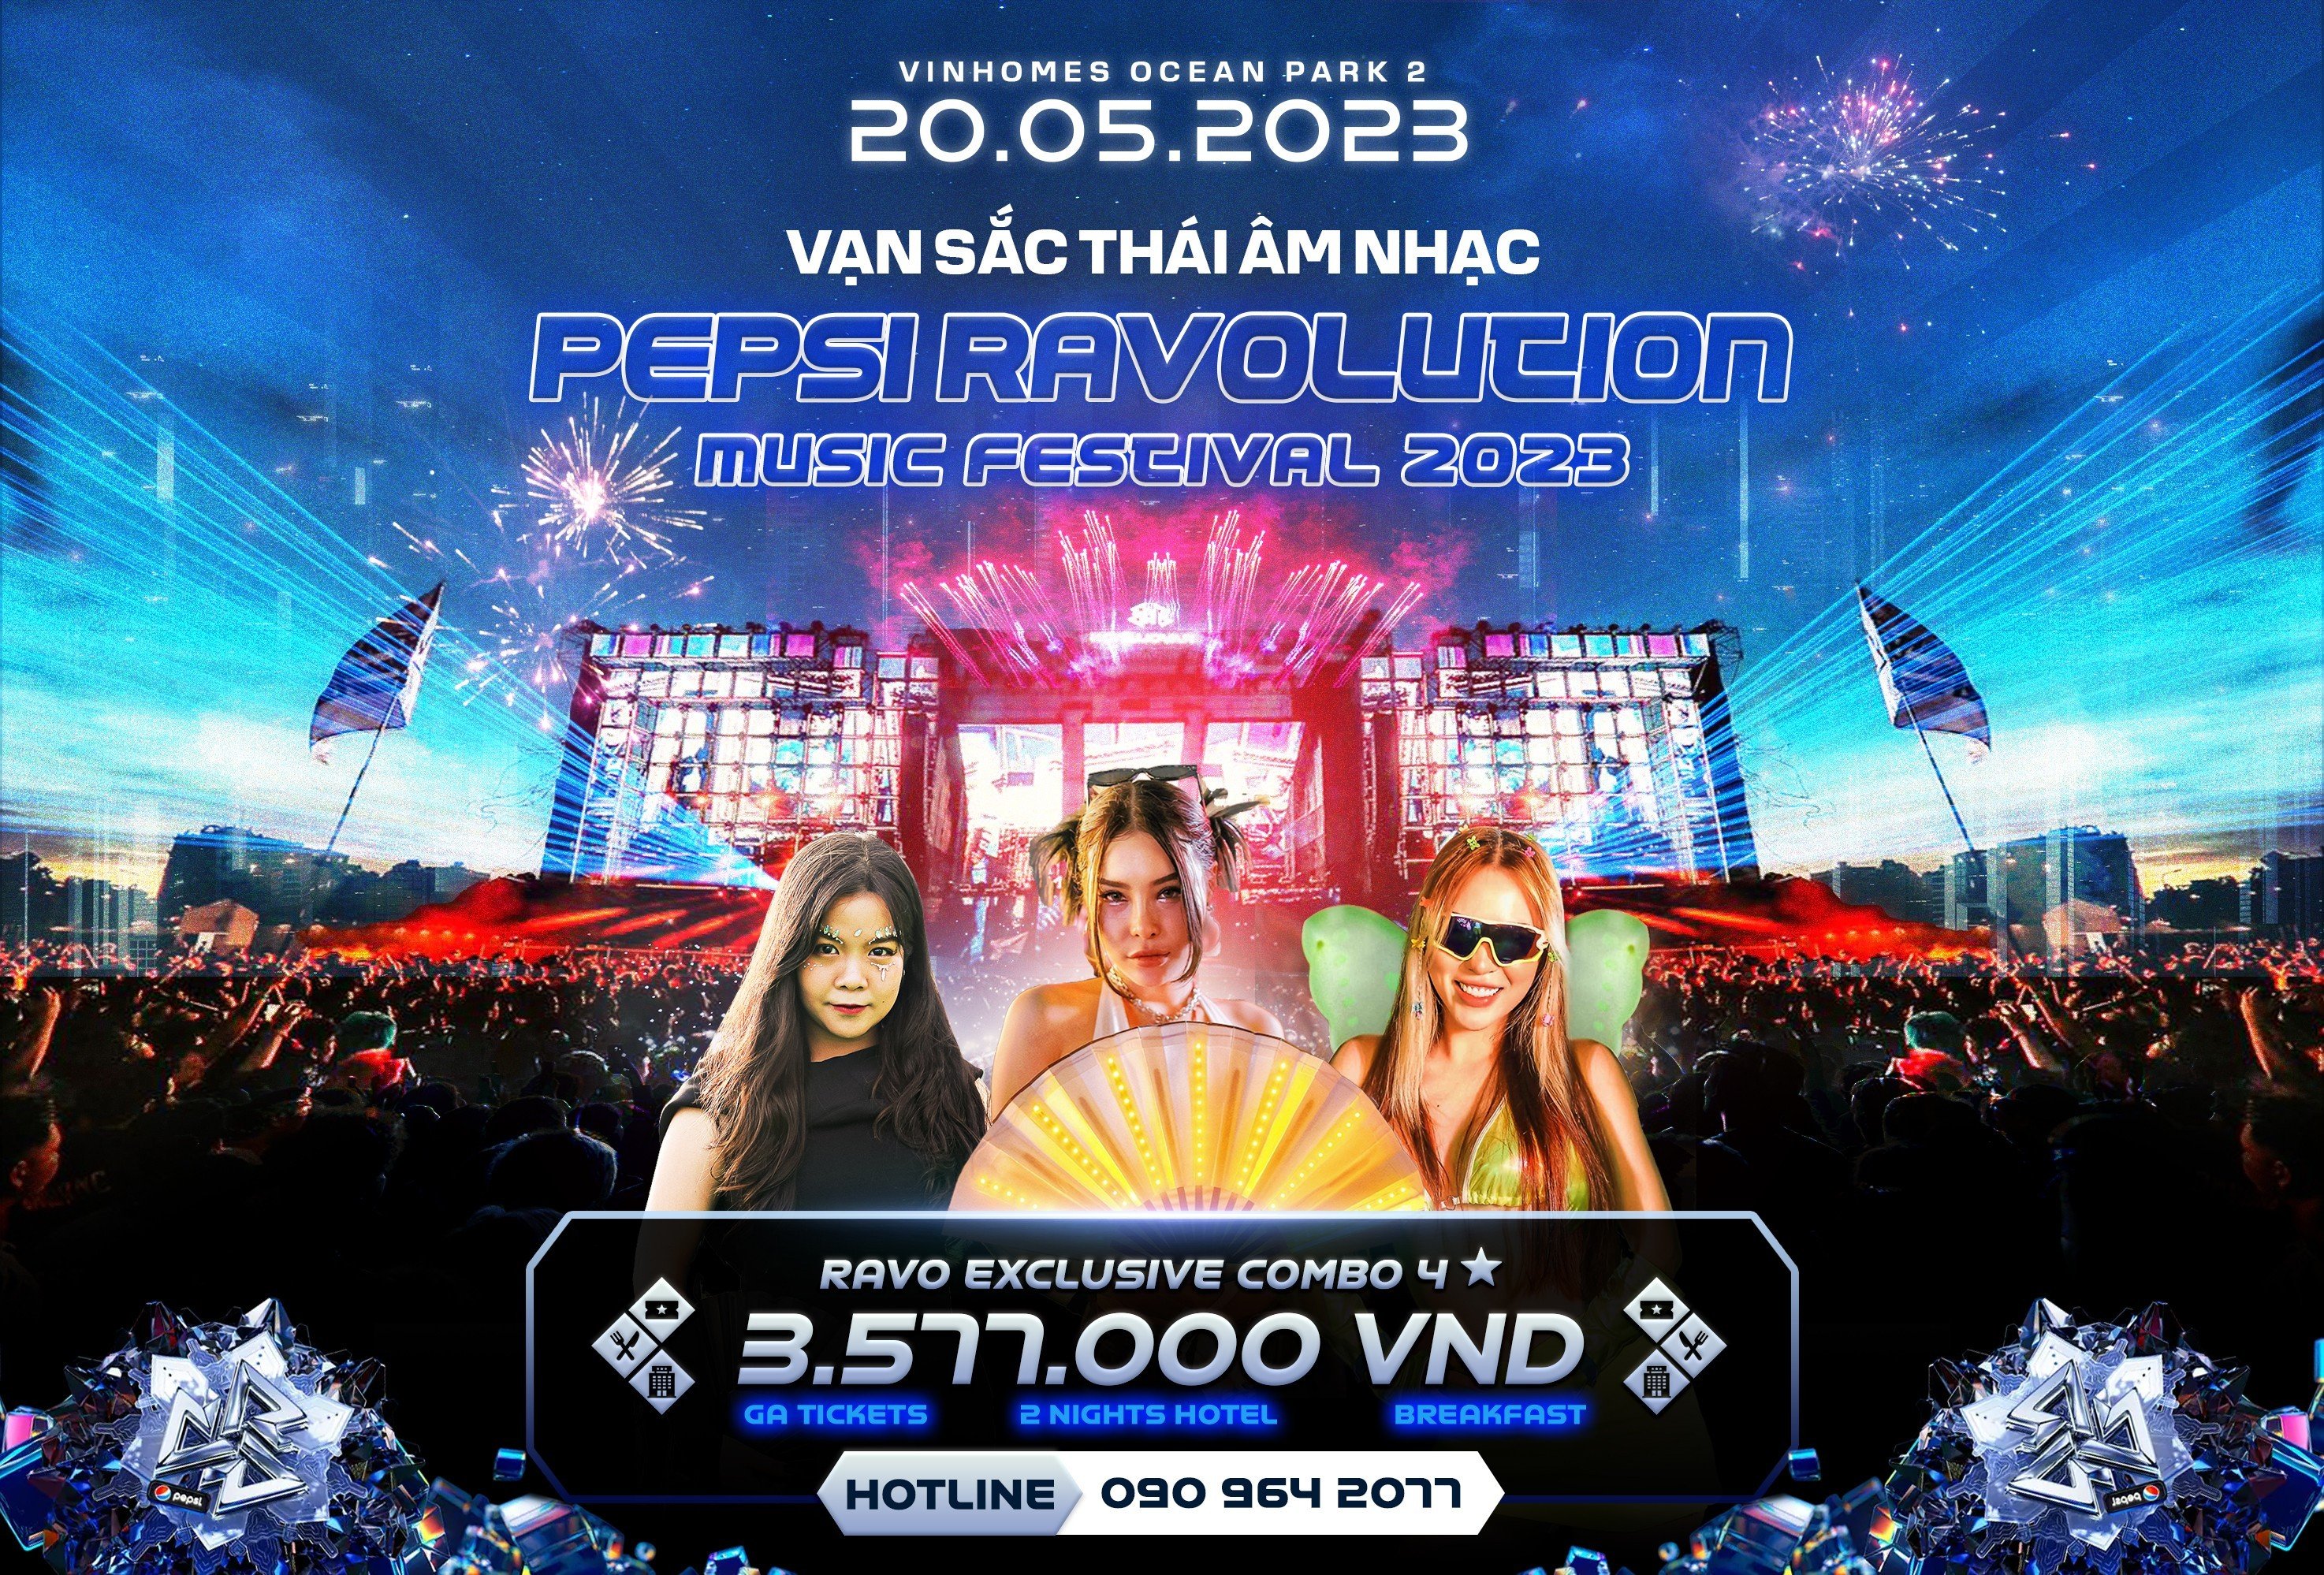 PEPSI RAVOLUTION MUSIC FESTIVAL 2023 – RAVO EXCLUSIVE COMBO 4*